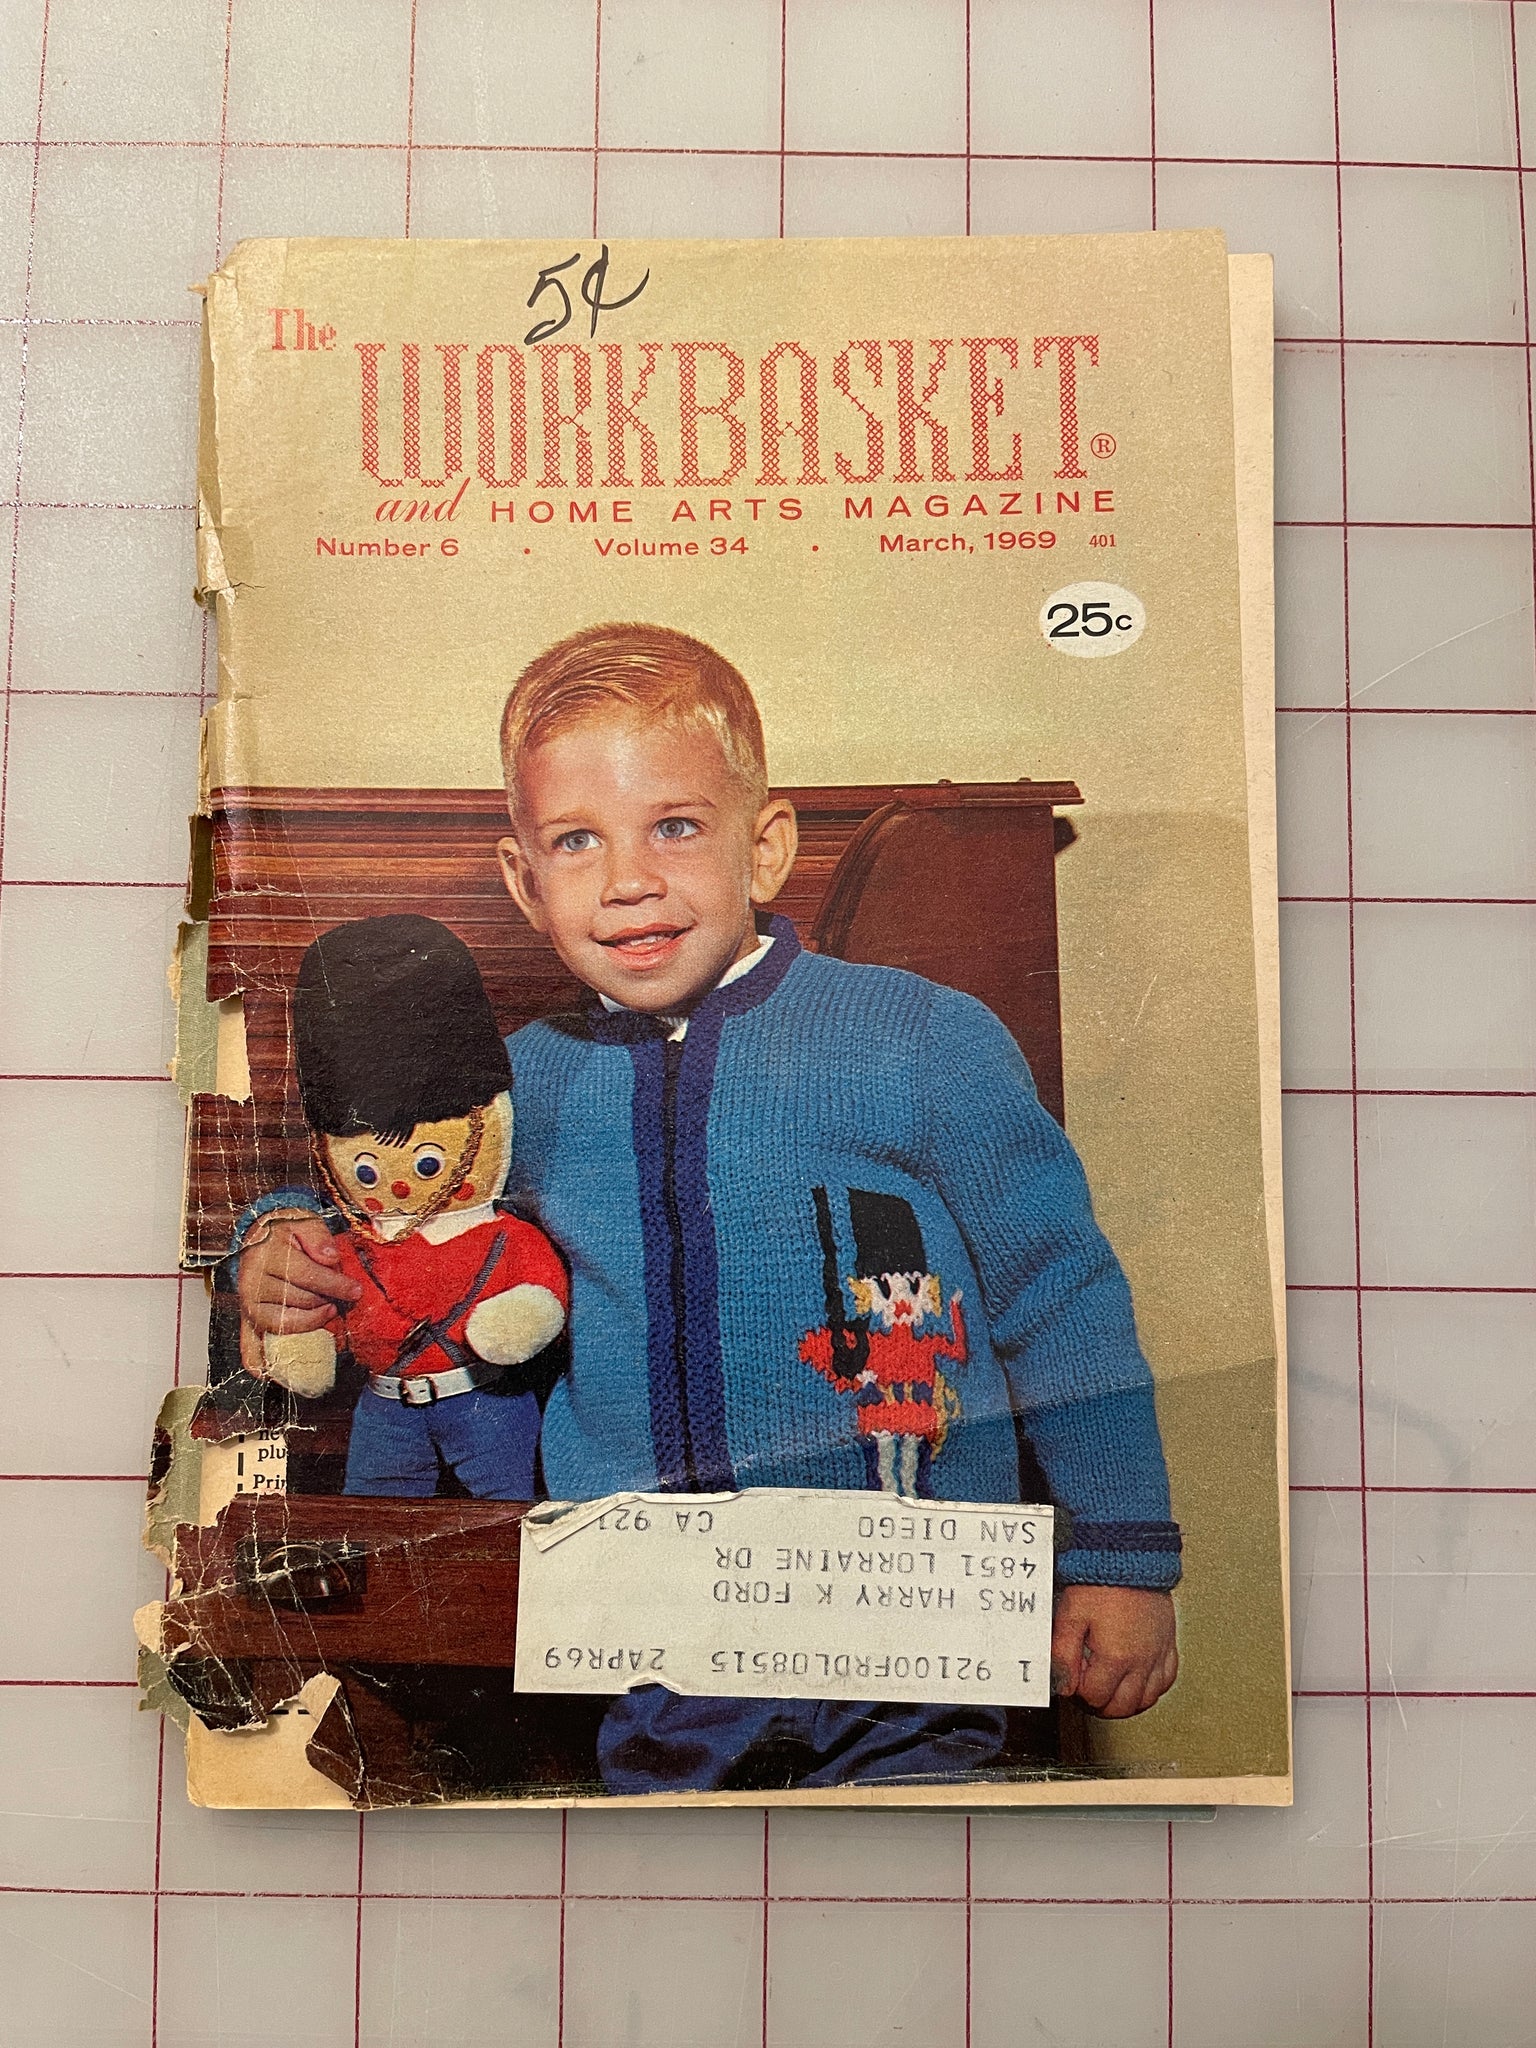 SALE 1969 The Workbasket Magazine - March Edition